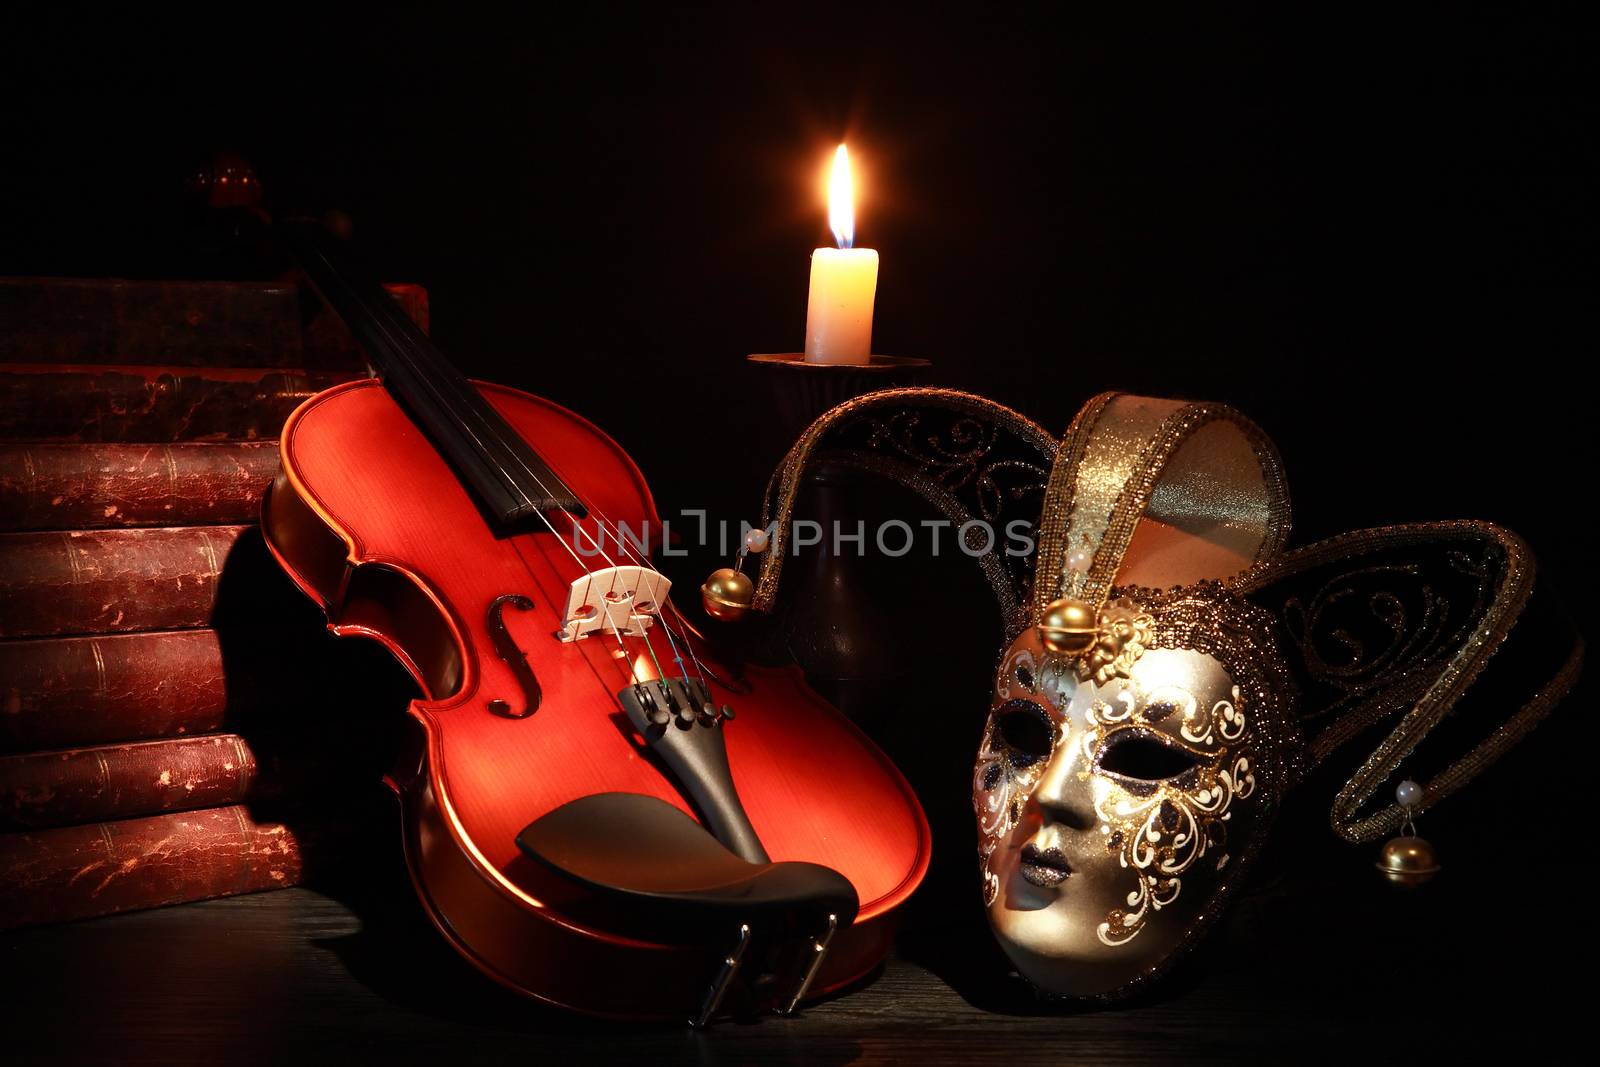 Violin And Mask by kvkirillov